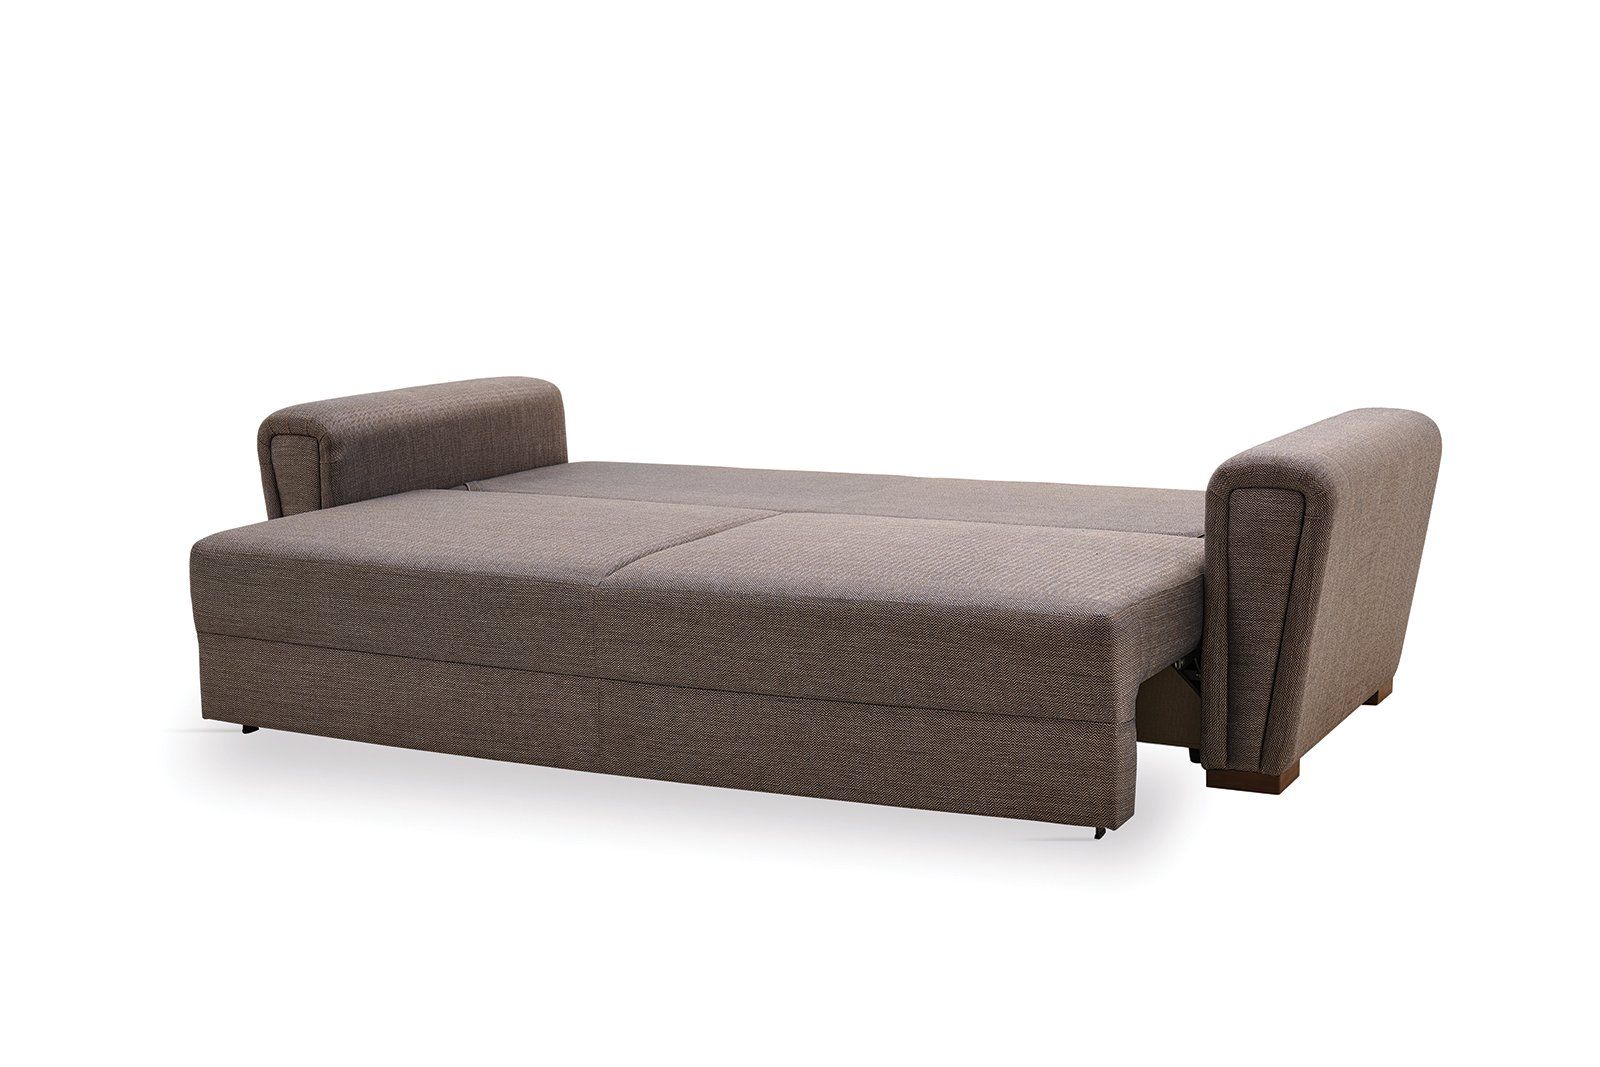 Brera Brown/Blue 3-Seater Sofa Bed with Storage - BRERA 03.302.0488.5576.0048.0000.20.14